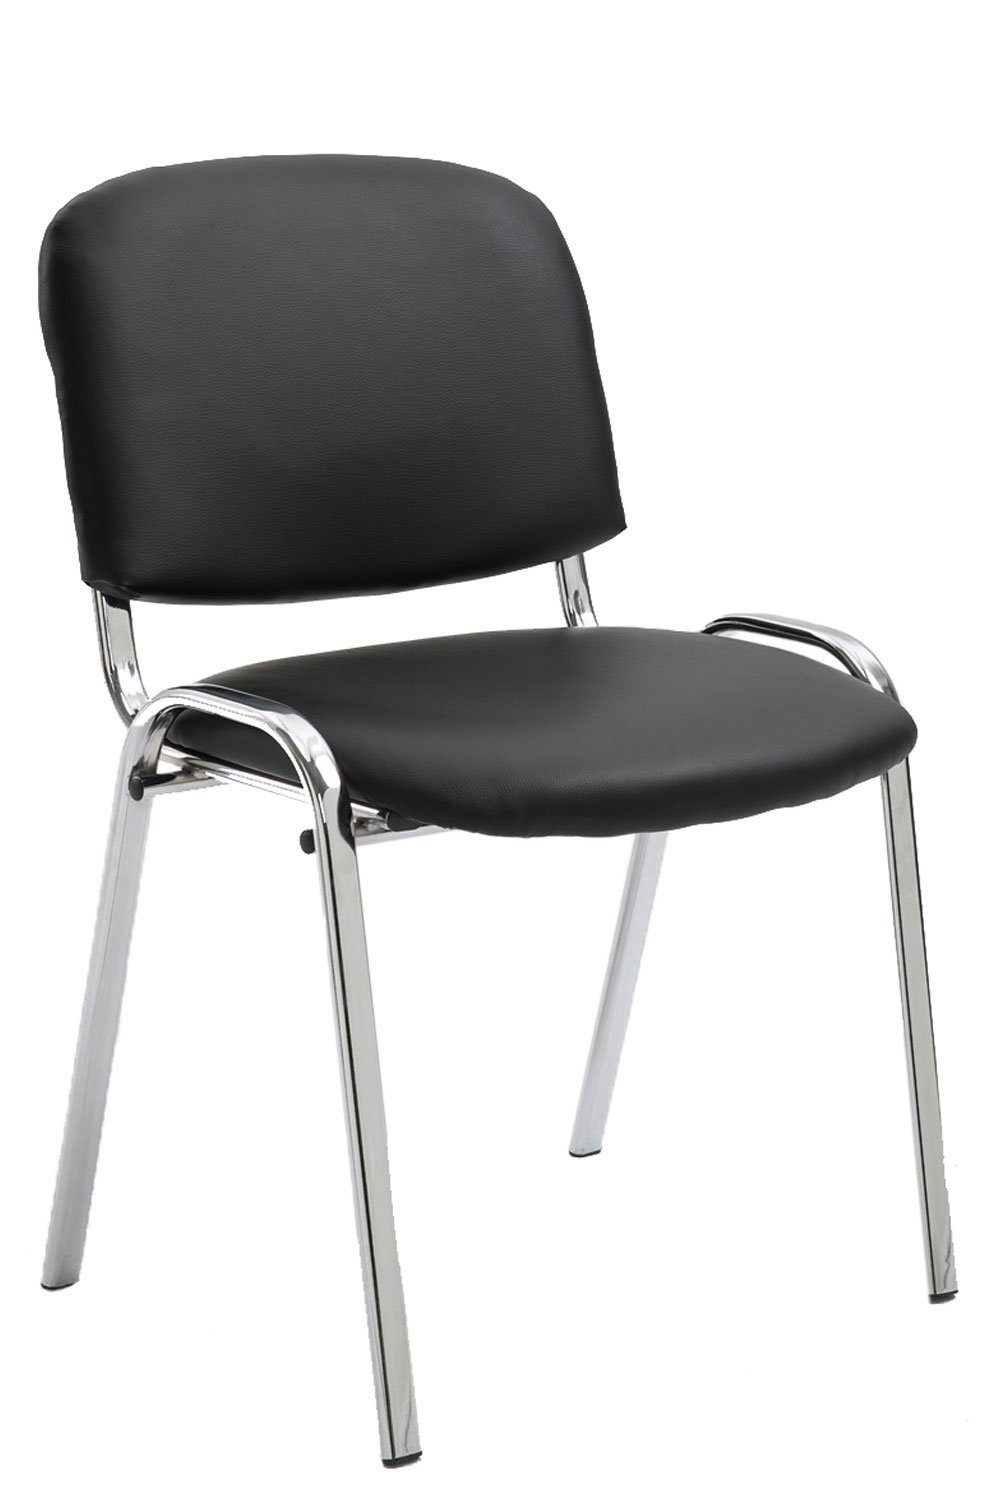 - - Gestell: Kunstleder Sitzfläche: (Besprechungsstuhl hochwertiger Polsterung Keen Besucherstuhl Warteraumstuhl - chrom Konferenzstuhl TPFLiving Metall - Messestuhl), mit schwarz